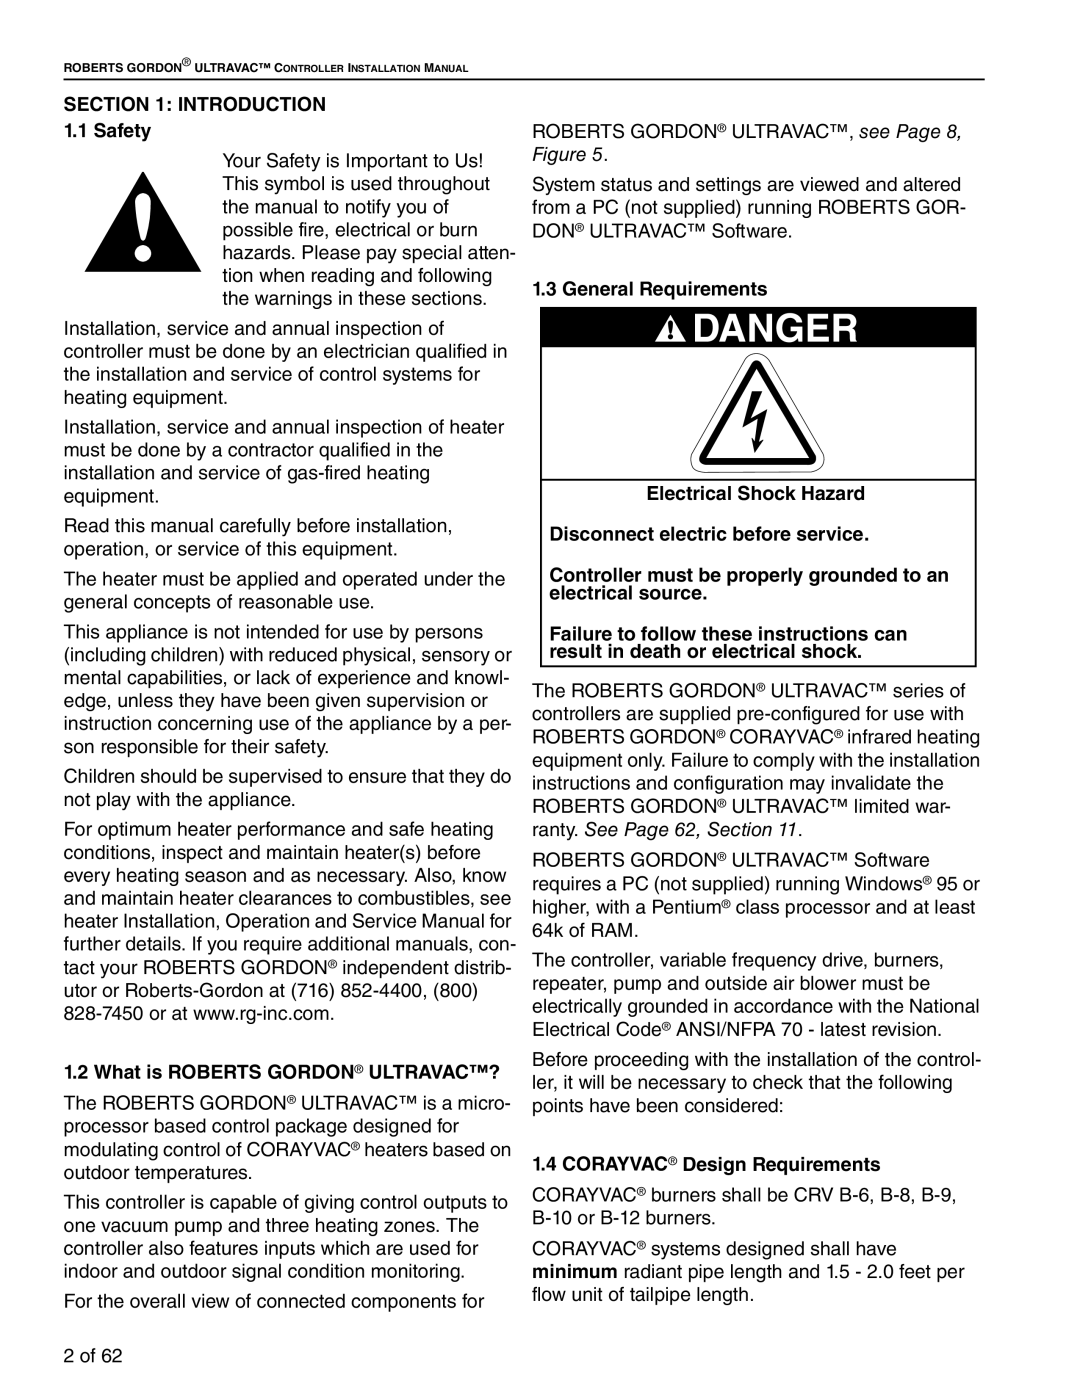 Roberts Gorden 10081601NA Rev H 12/11 Danger, INTRODUCTION 1.1 Safety, General Requirements, Electrical Shock Hazard 